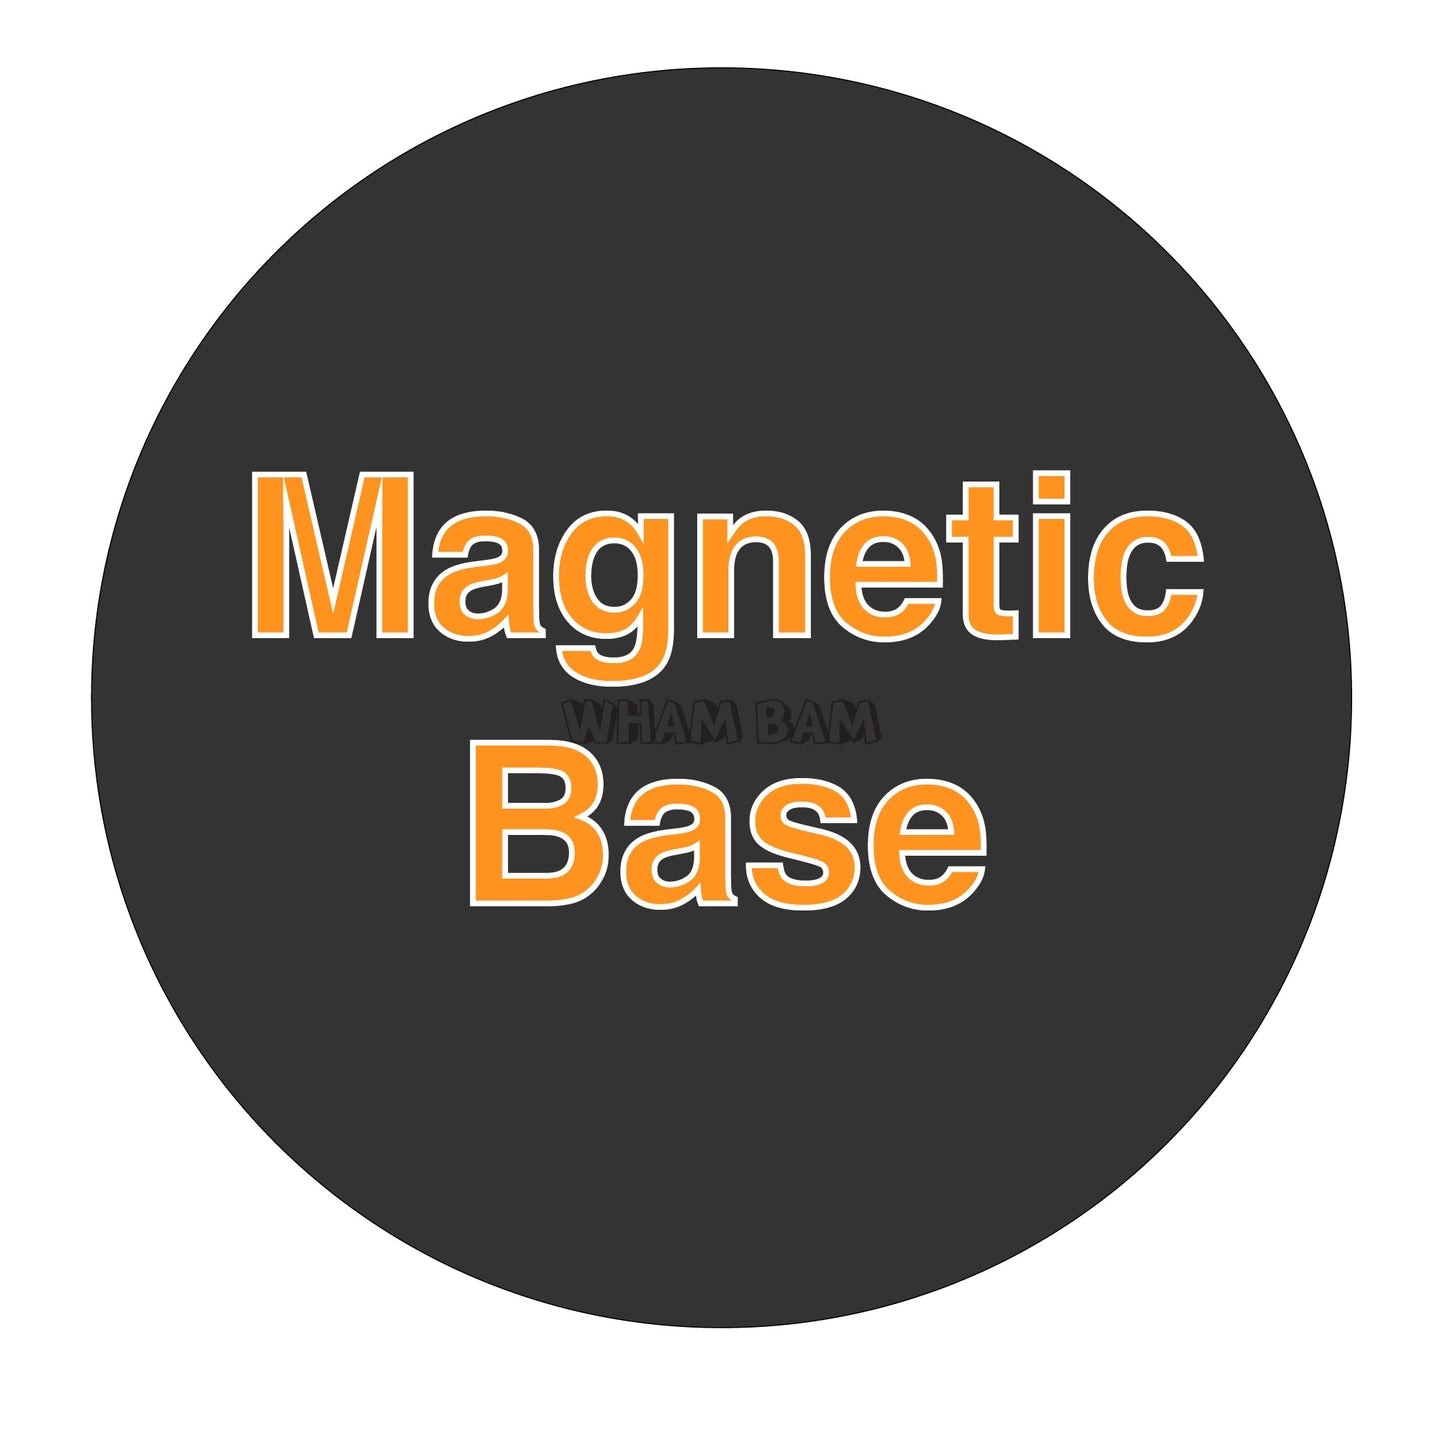 Magnetic Base - 310Ø No Cut Outs - Tractus T850 & Flsun V400